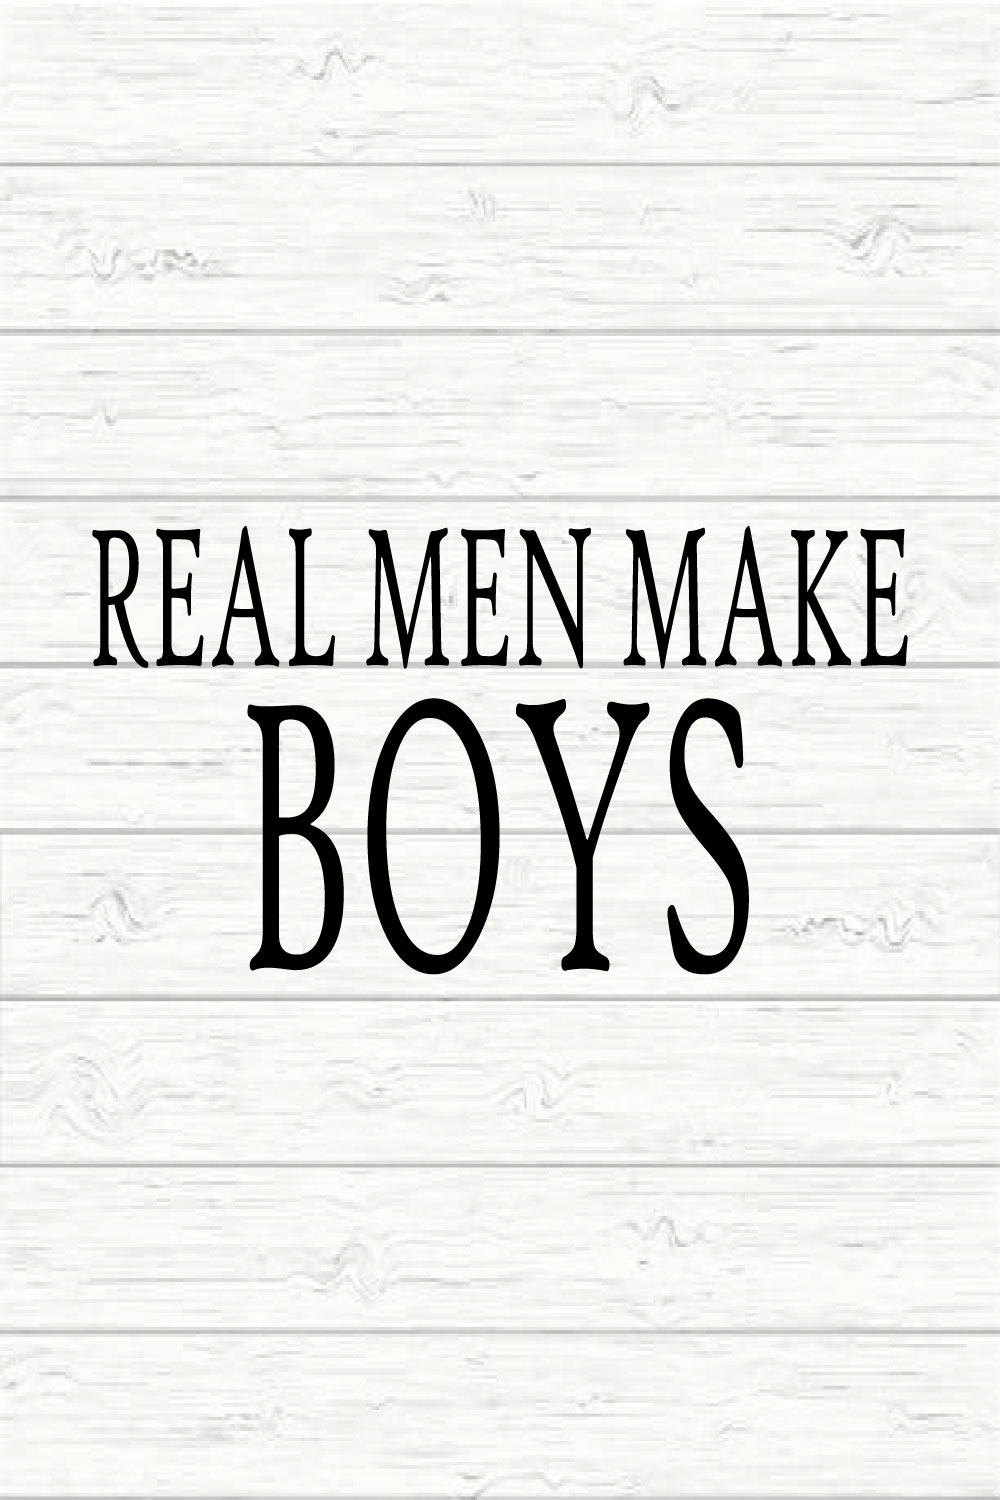 Real Men Make Boys pinterest preview image.